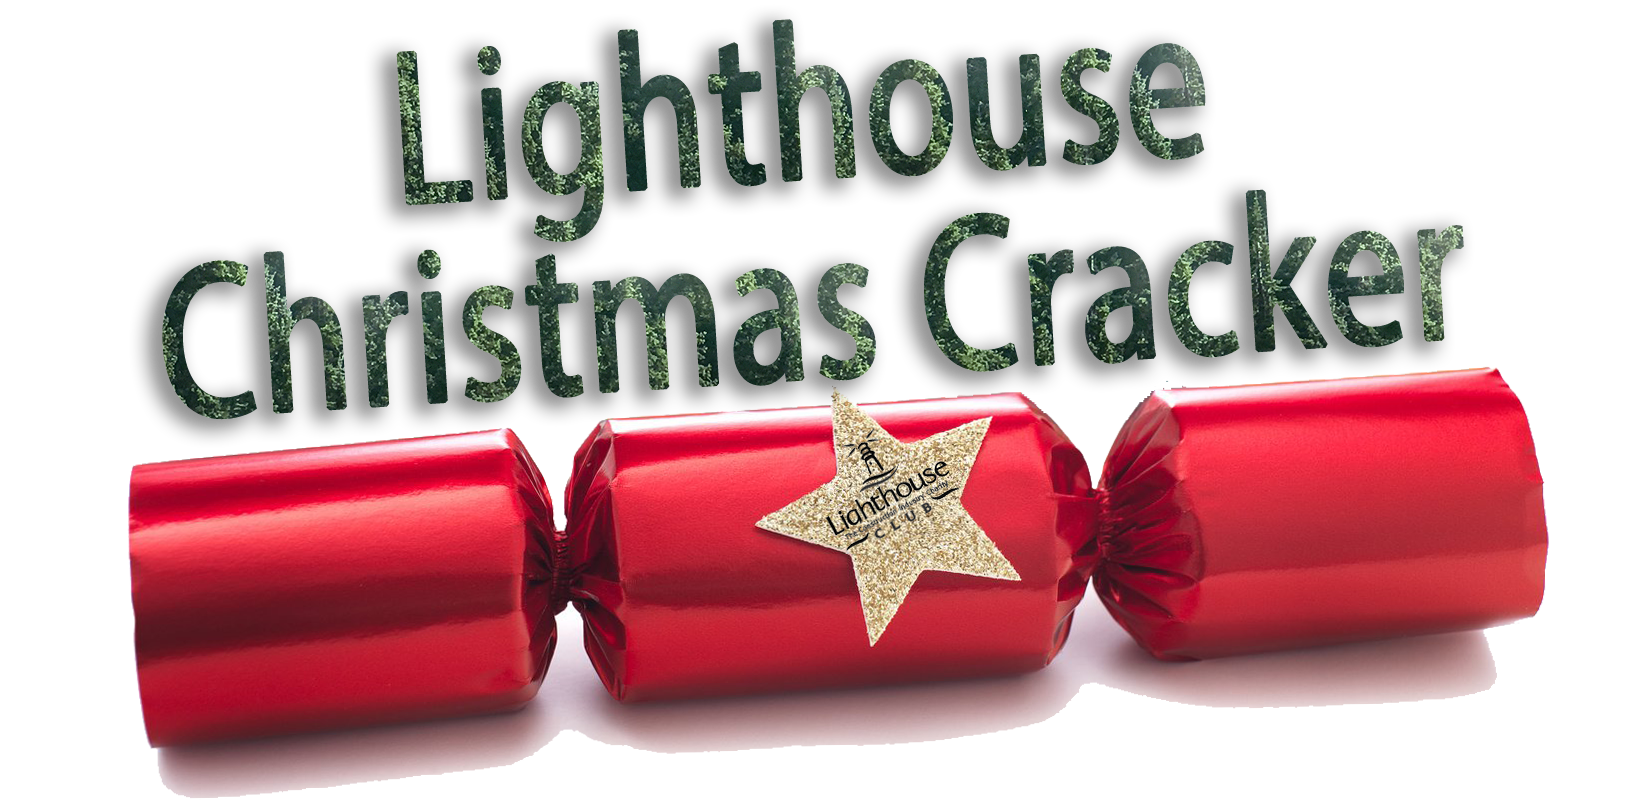 Lighthouse Club unveils £25,000 Christmas cracker